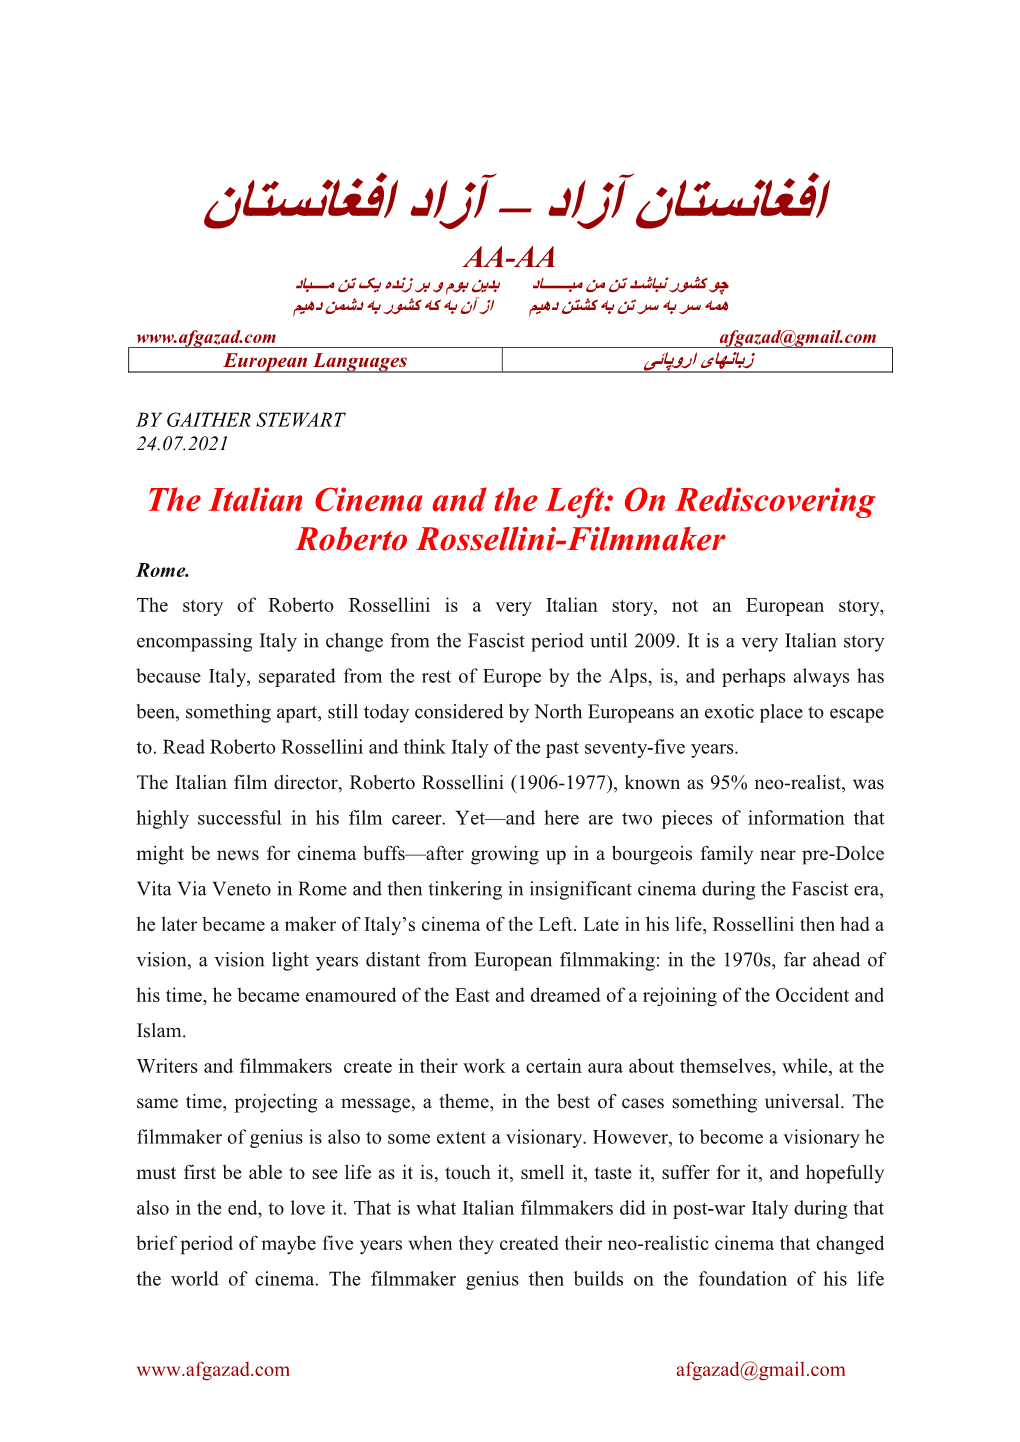 The Italian Cinema and the Left: on Rediscovering Roberto Rossellini-Filmmaker Rome